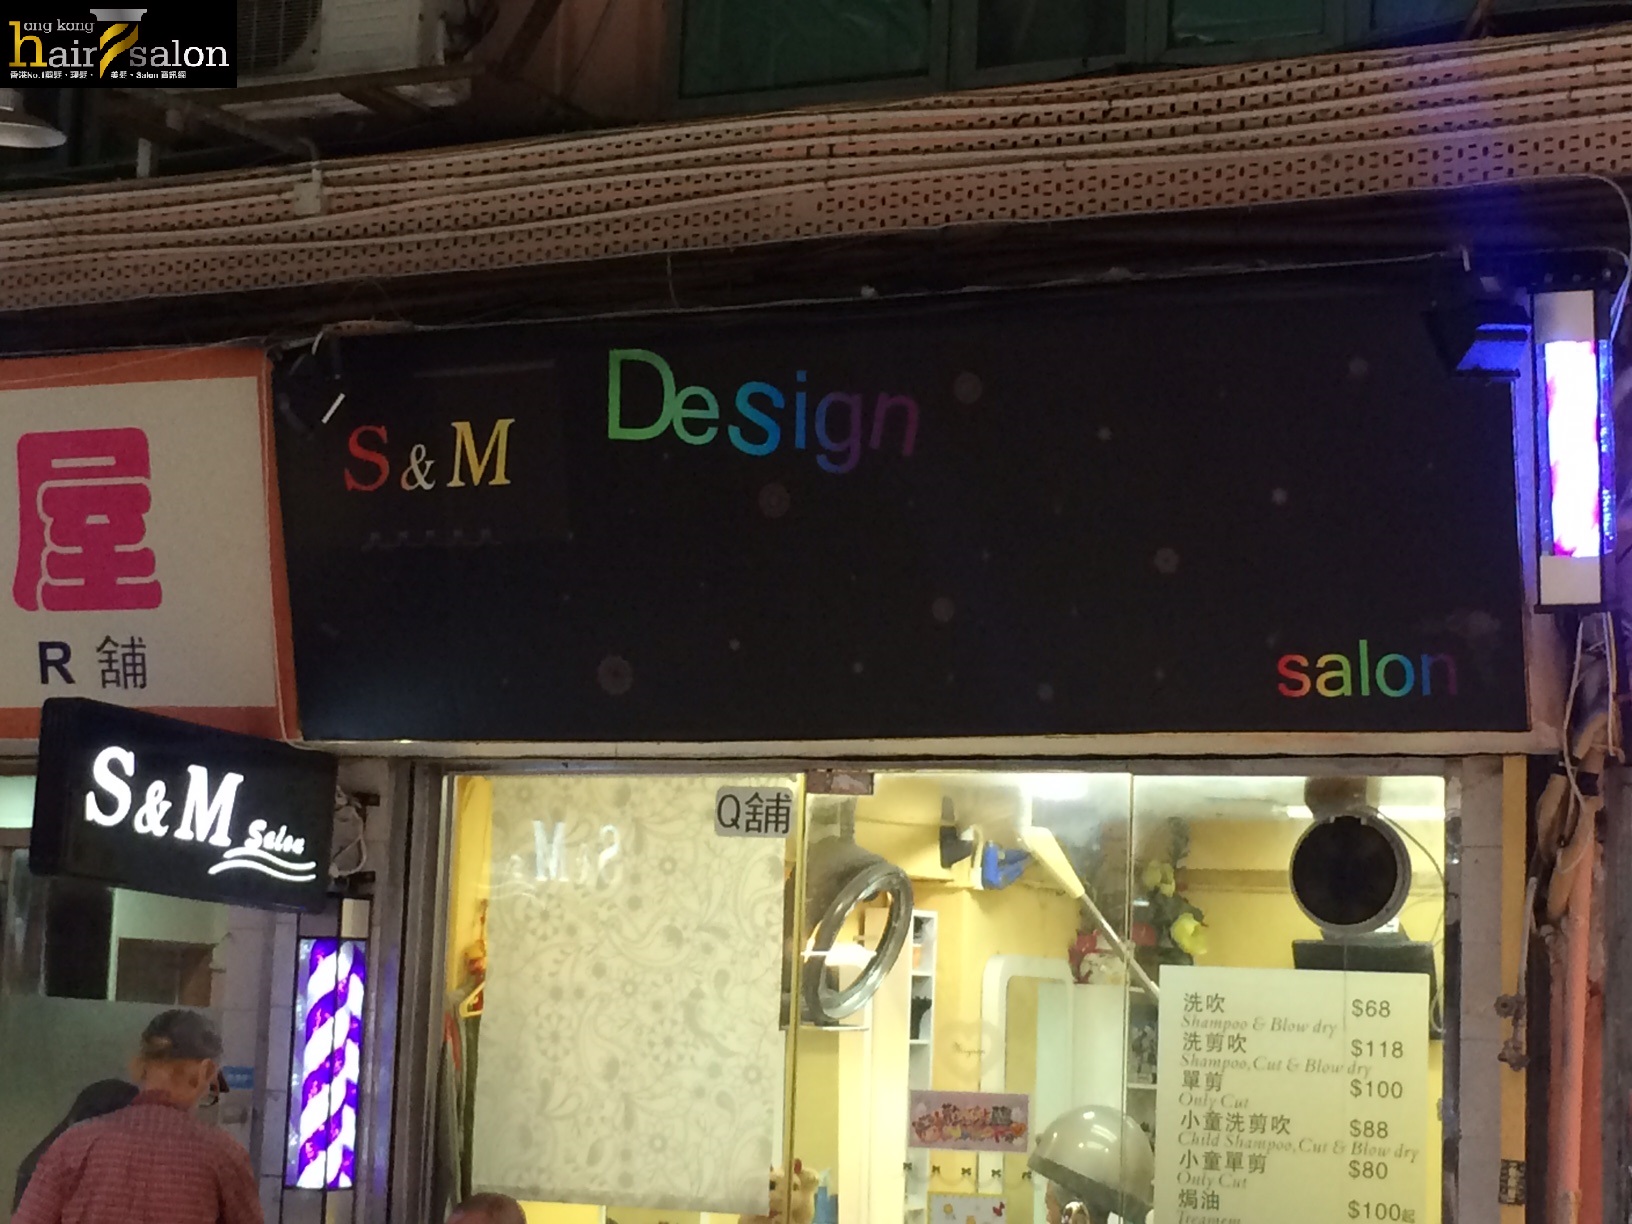 染髮: S&M Design Salon